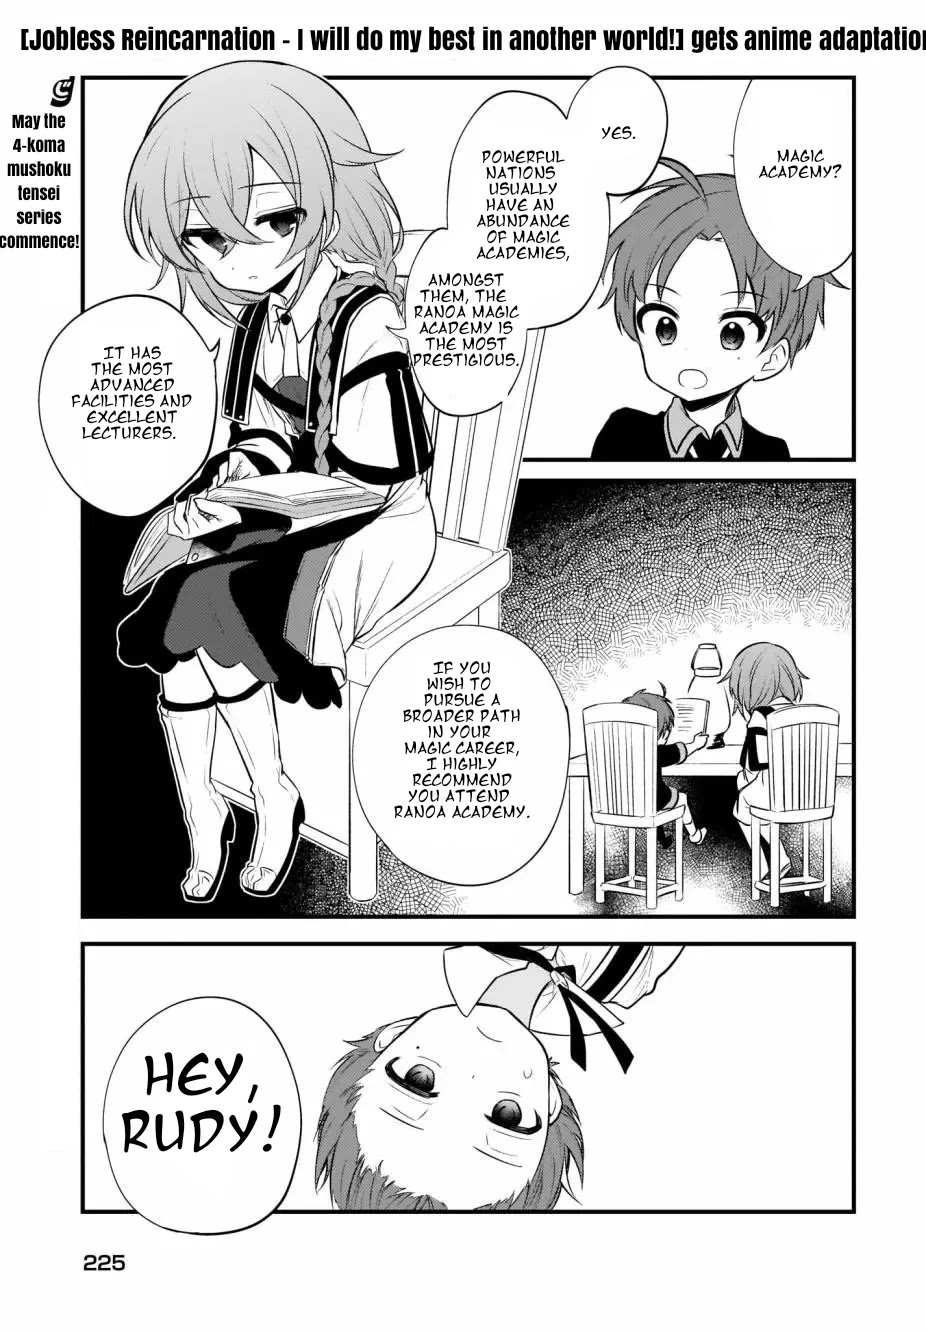 Mushoku Tensei: Even If It's A 4-Koma, I'll Get Serious - Page 1